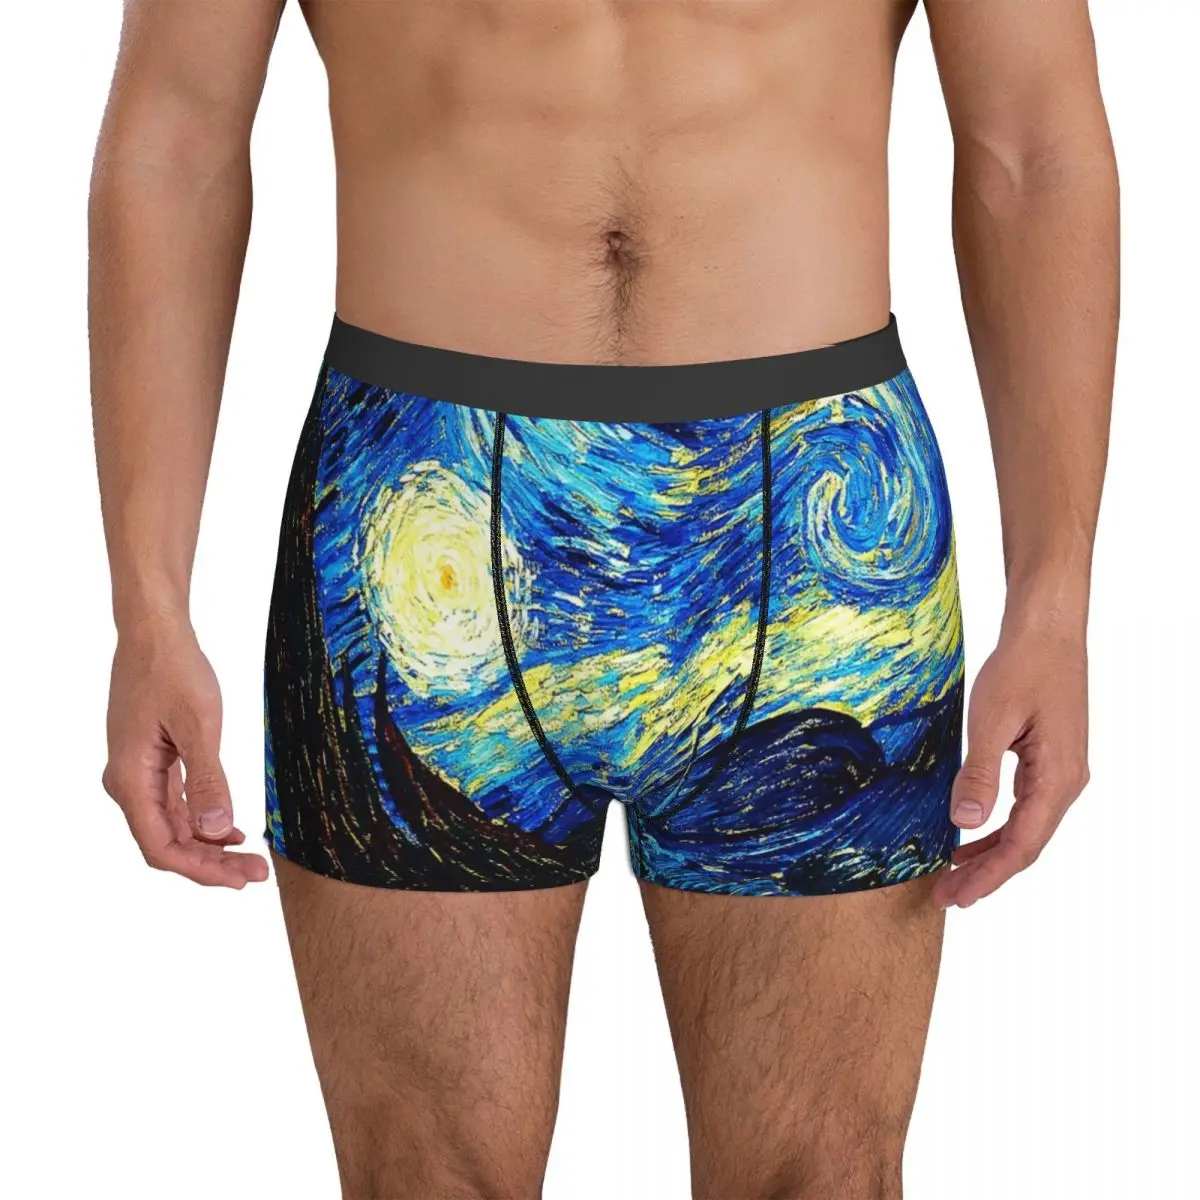 Starry Night Underwear Vincent Van Gogh Men's Panties Printed Comfortable Boxershorts Trenky Shorts Briefs Big Size